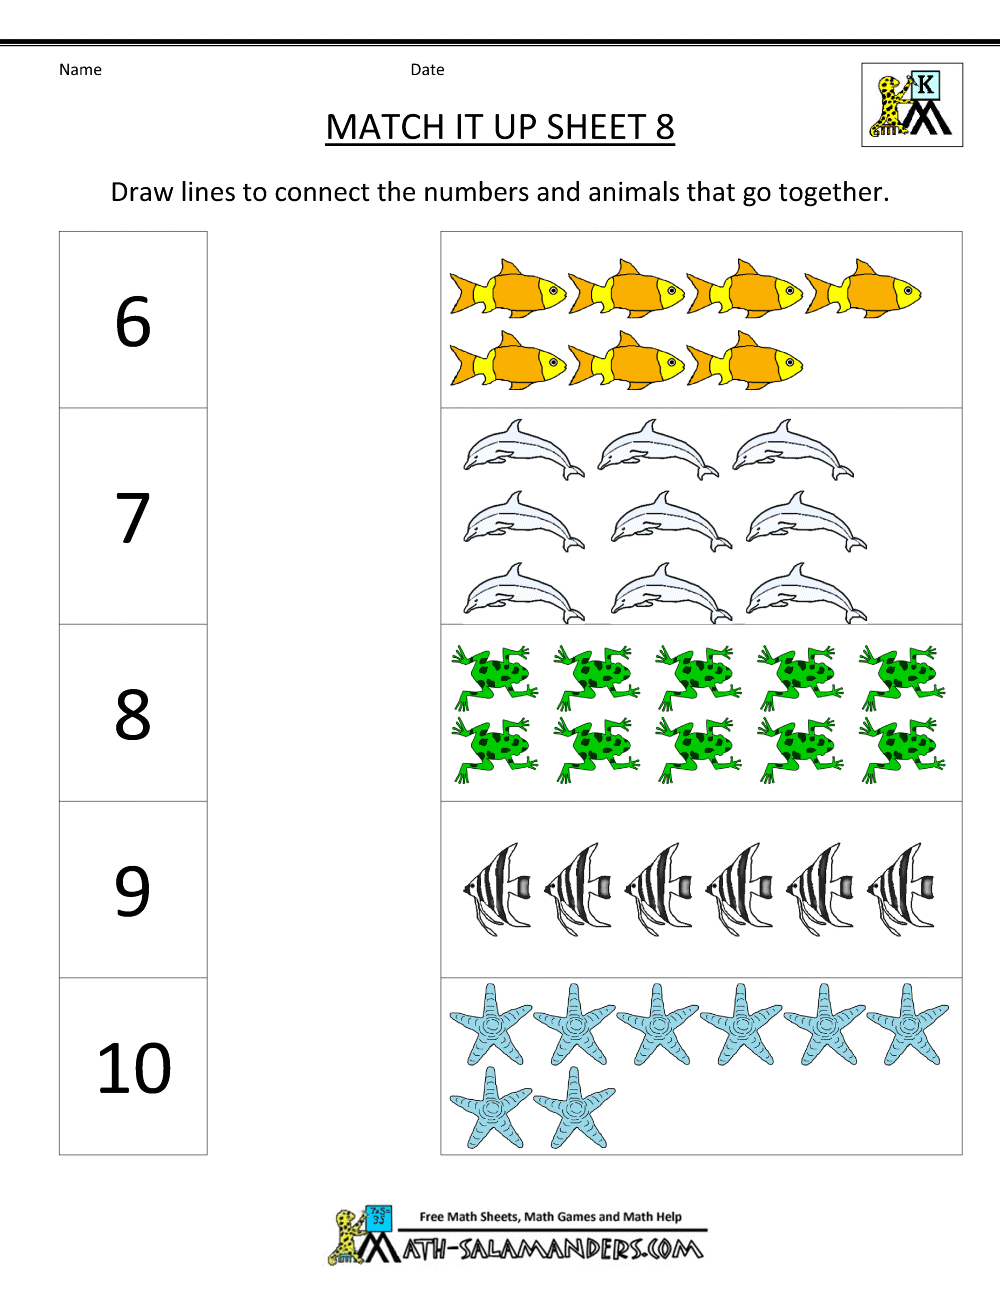 kindergarten-worksheets-drawing-alyssamilanoblog-smileav